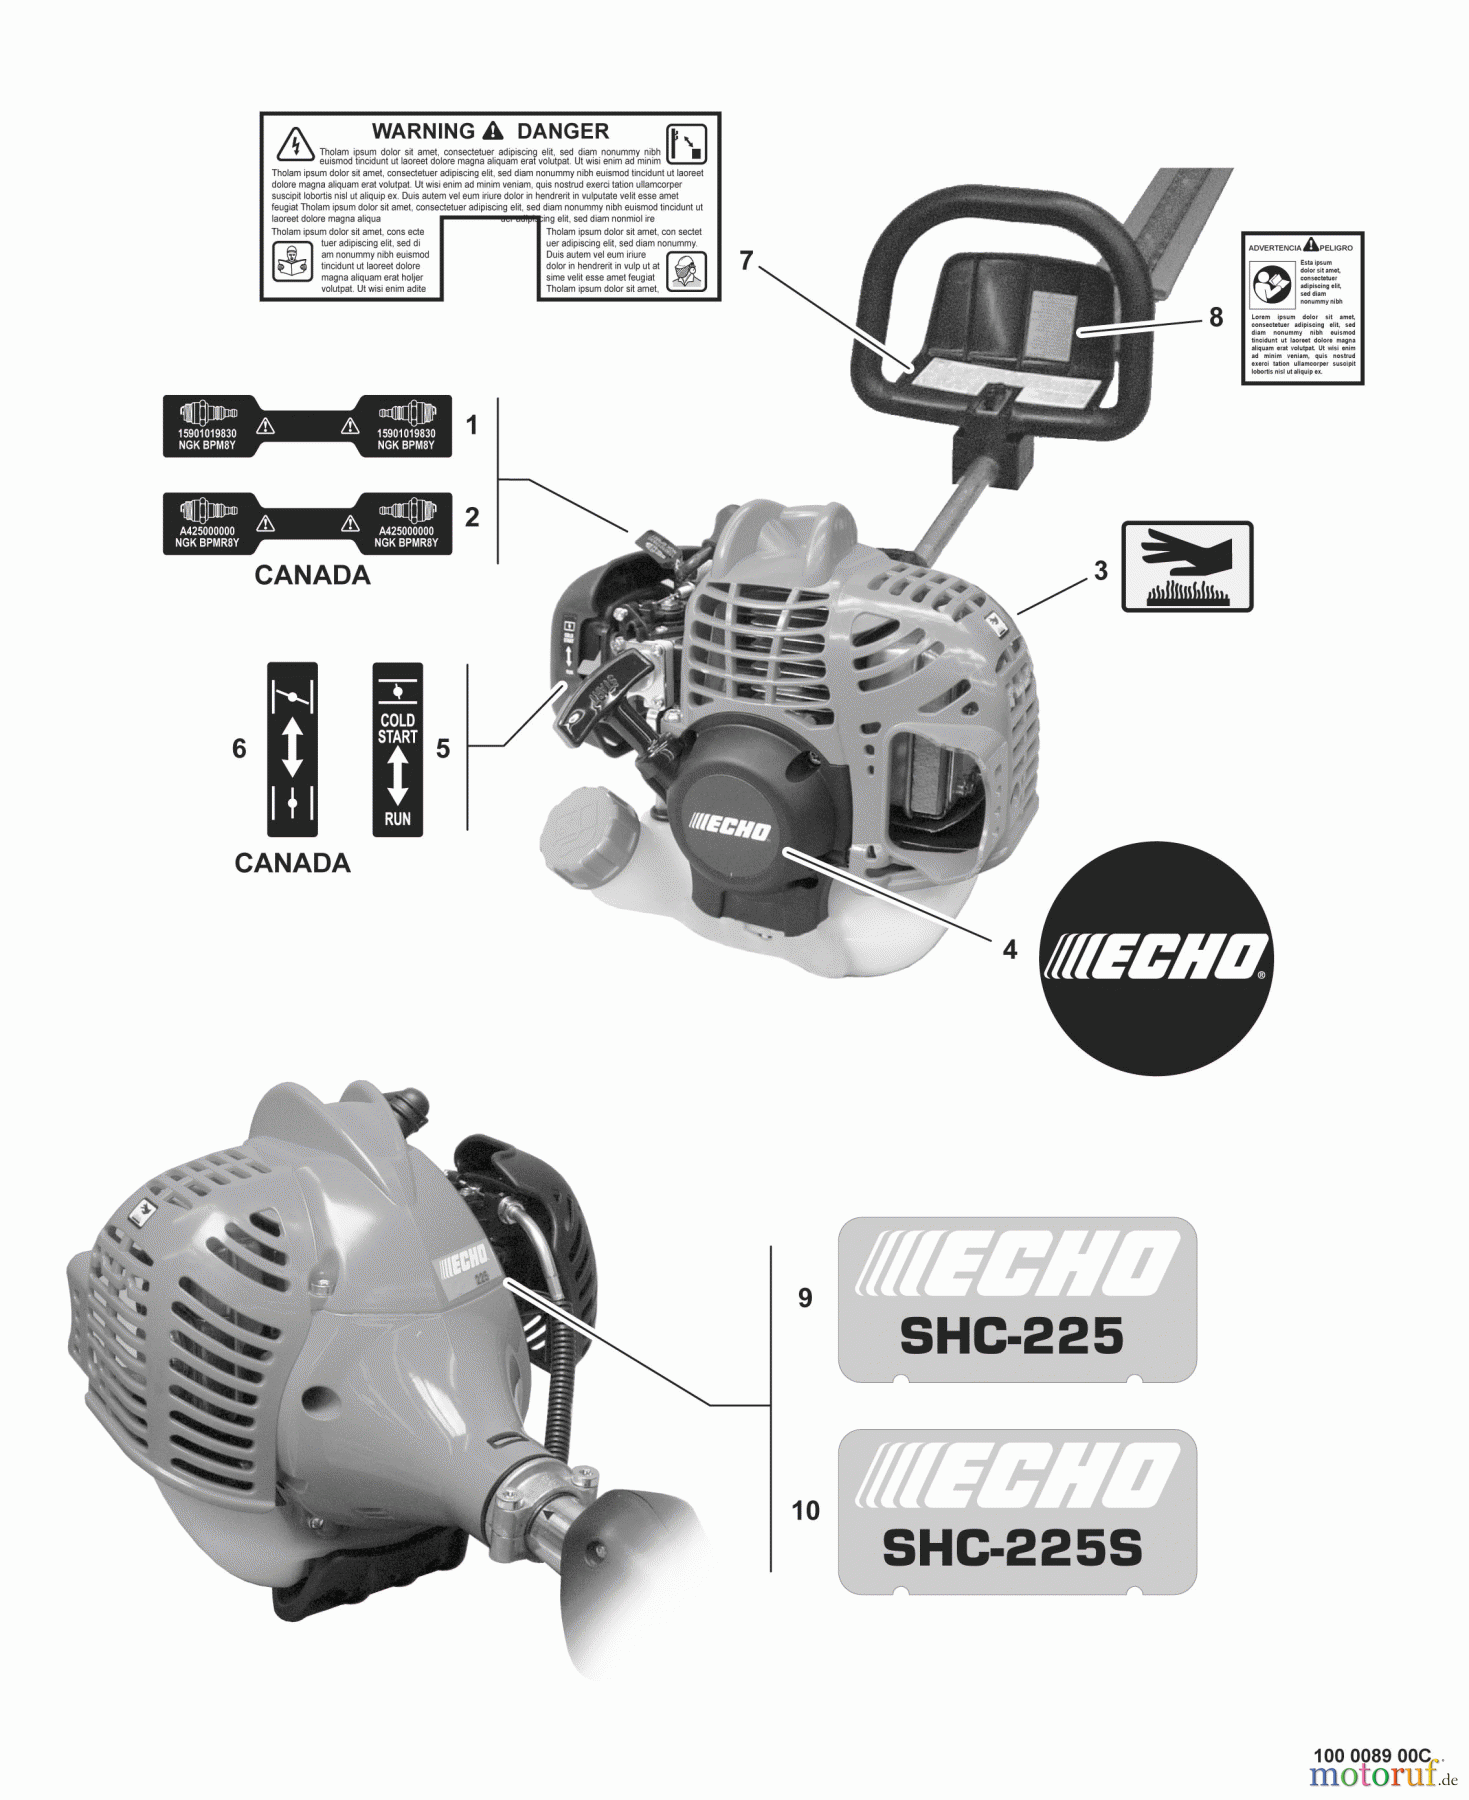  Echo Heckenscheren SHC-225S - Echo Shaft Hedge Trimmer, S/N: S86213001001 - S86213999999 Labels